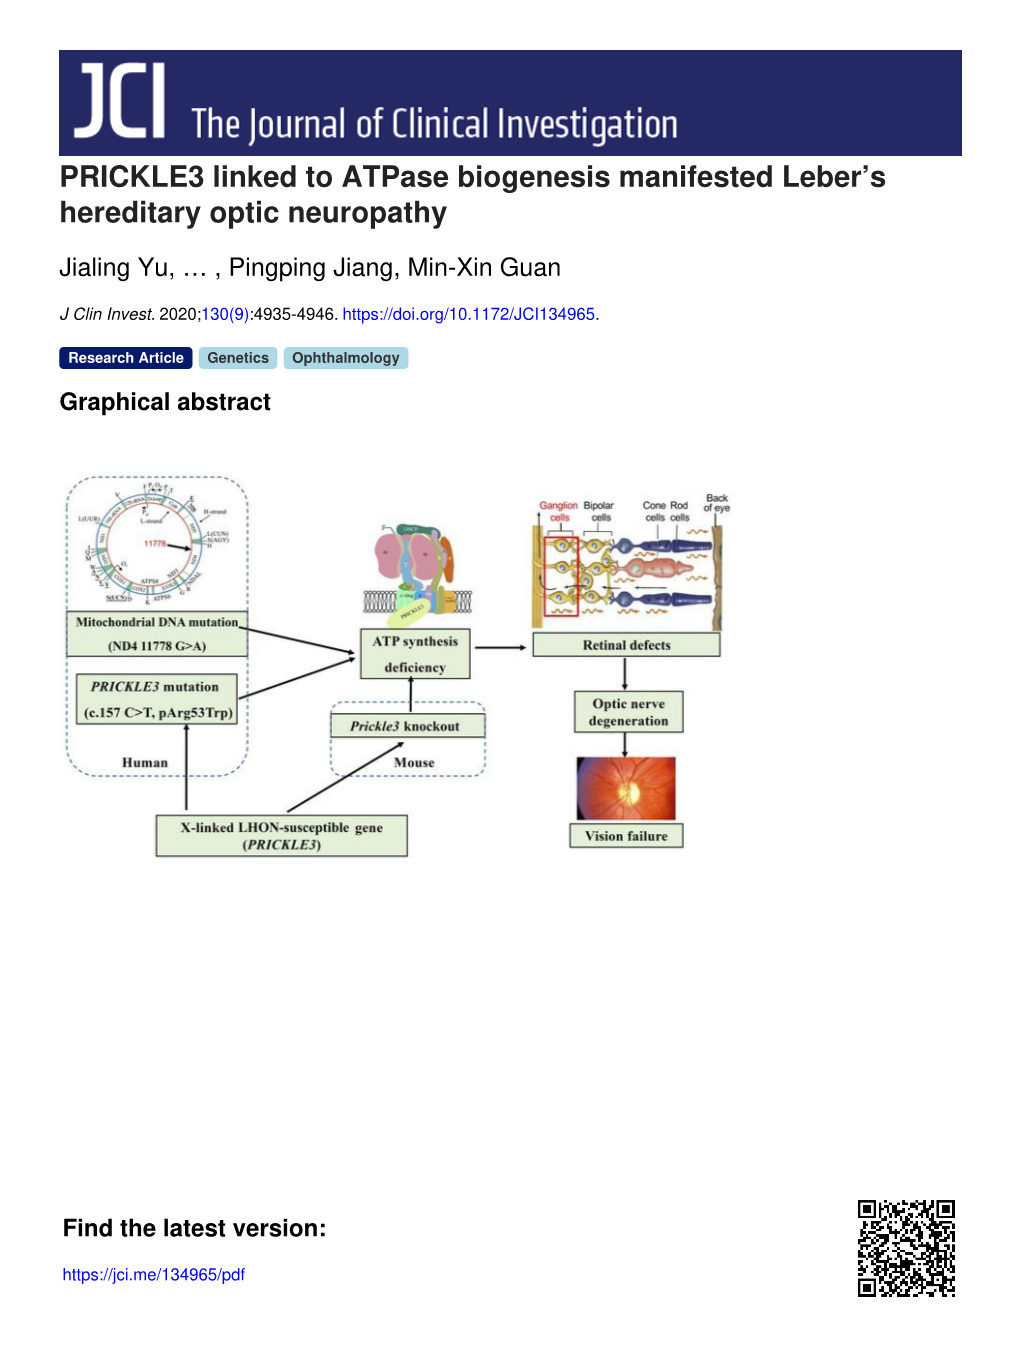 PRICKLE3 Linked to Atpase Biogenesis Manifested Leber's Hereditary Optic Neuropathy